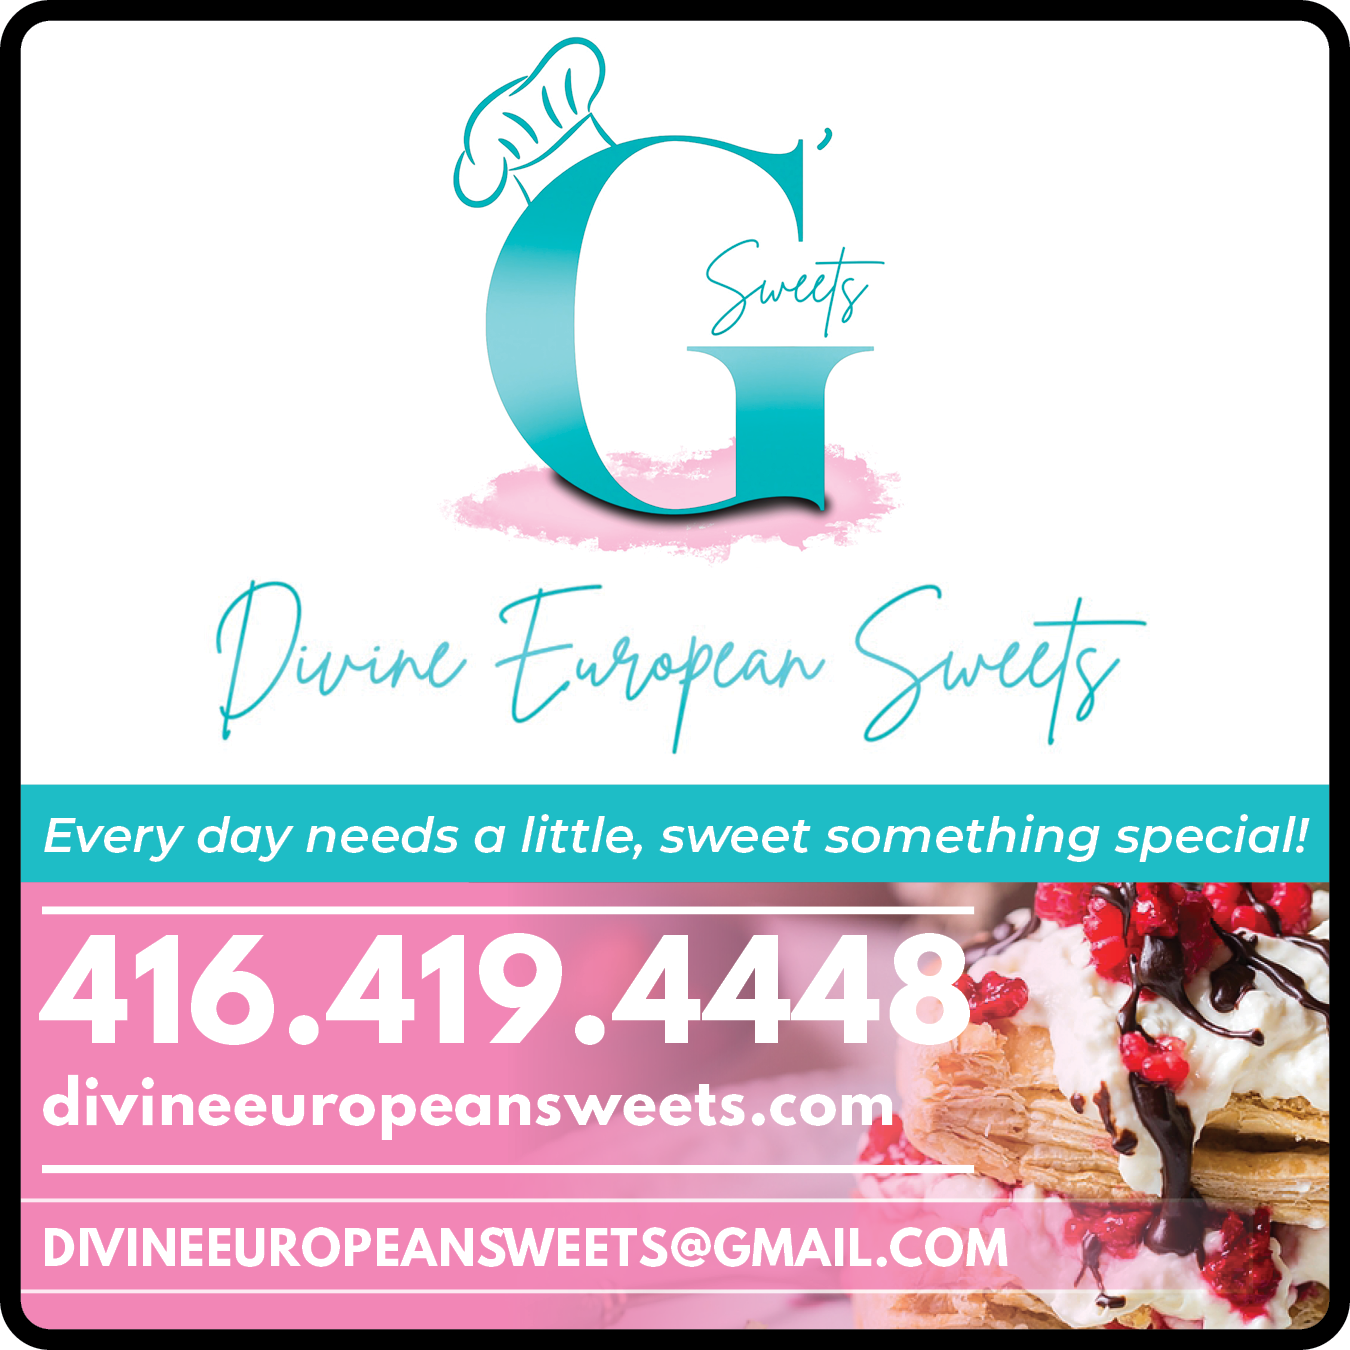 G's Divine European Sweets